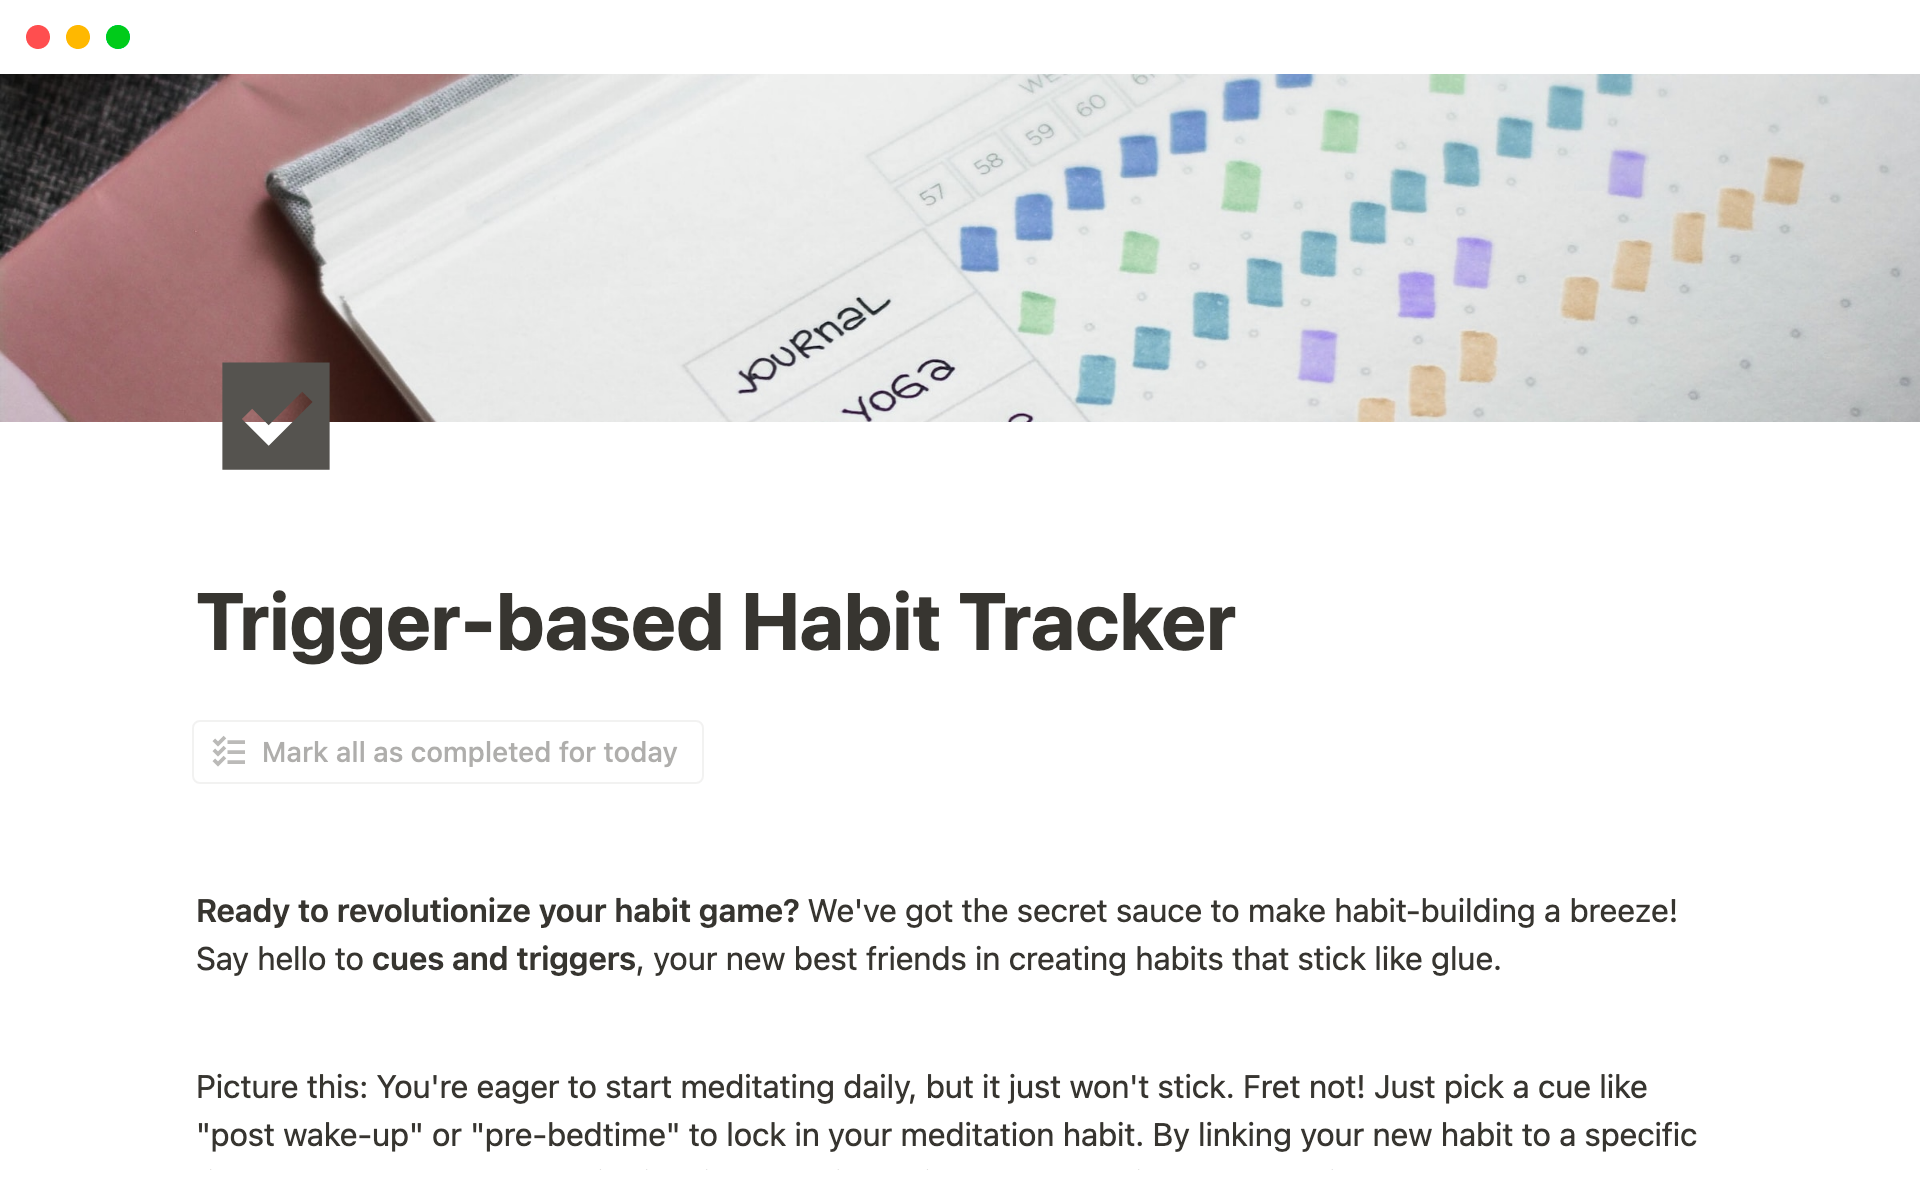 Help people track their habits